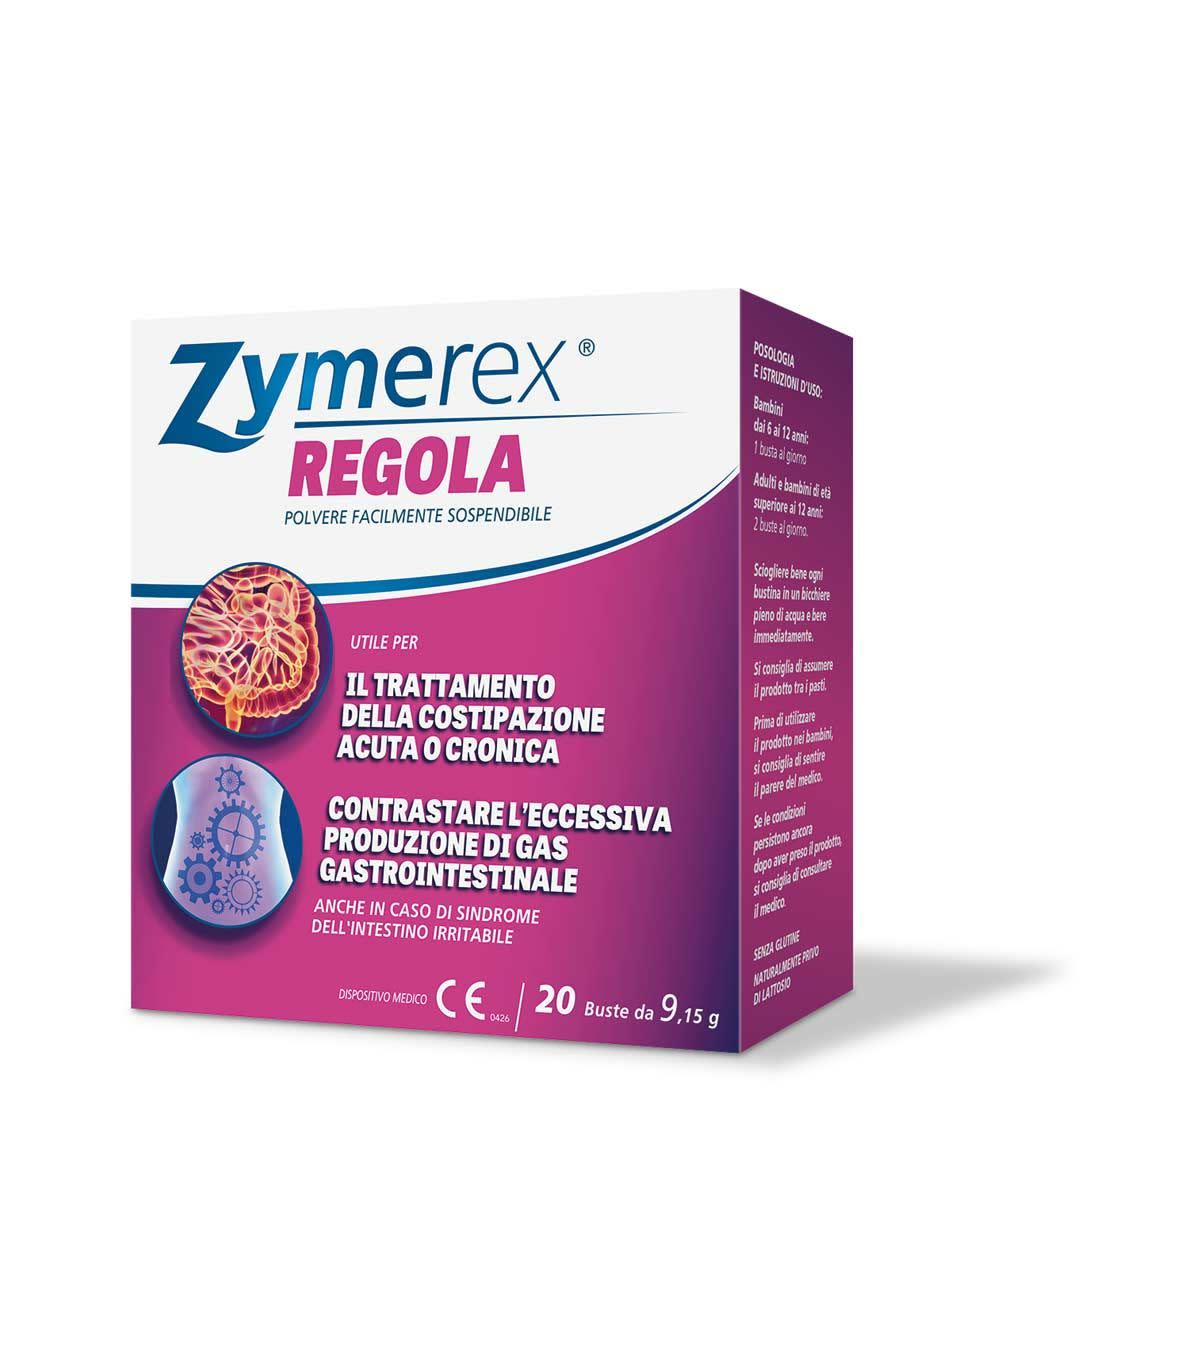 981047133 - Zymerex Regola Integratore regolarità intestinale 20 buste - 4737120_4.jpg